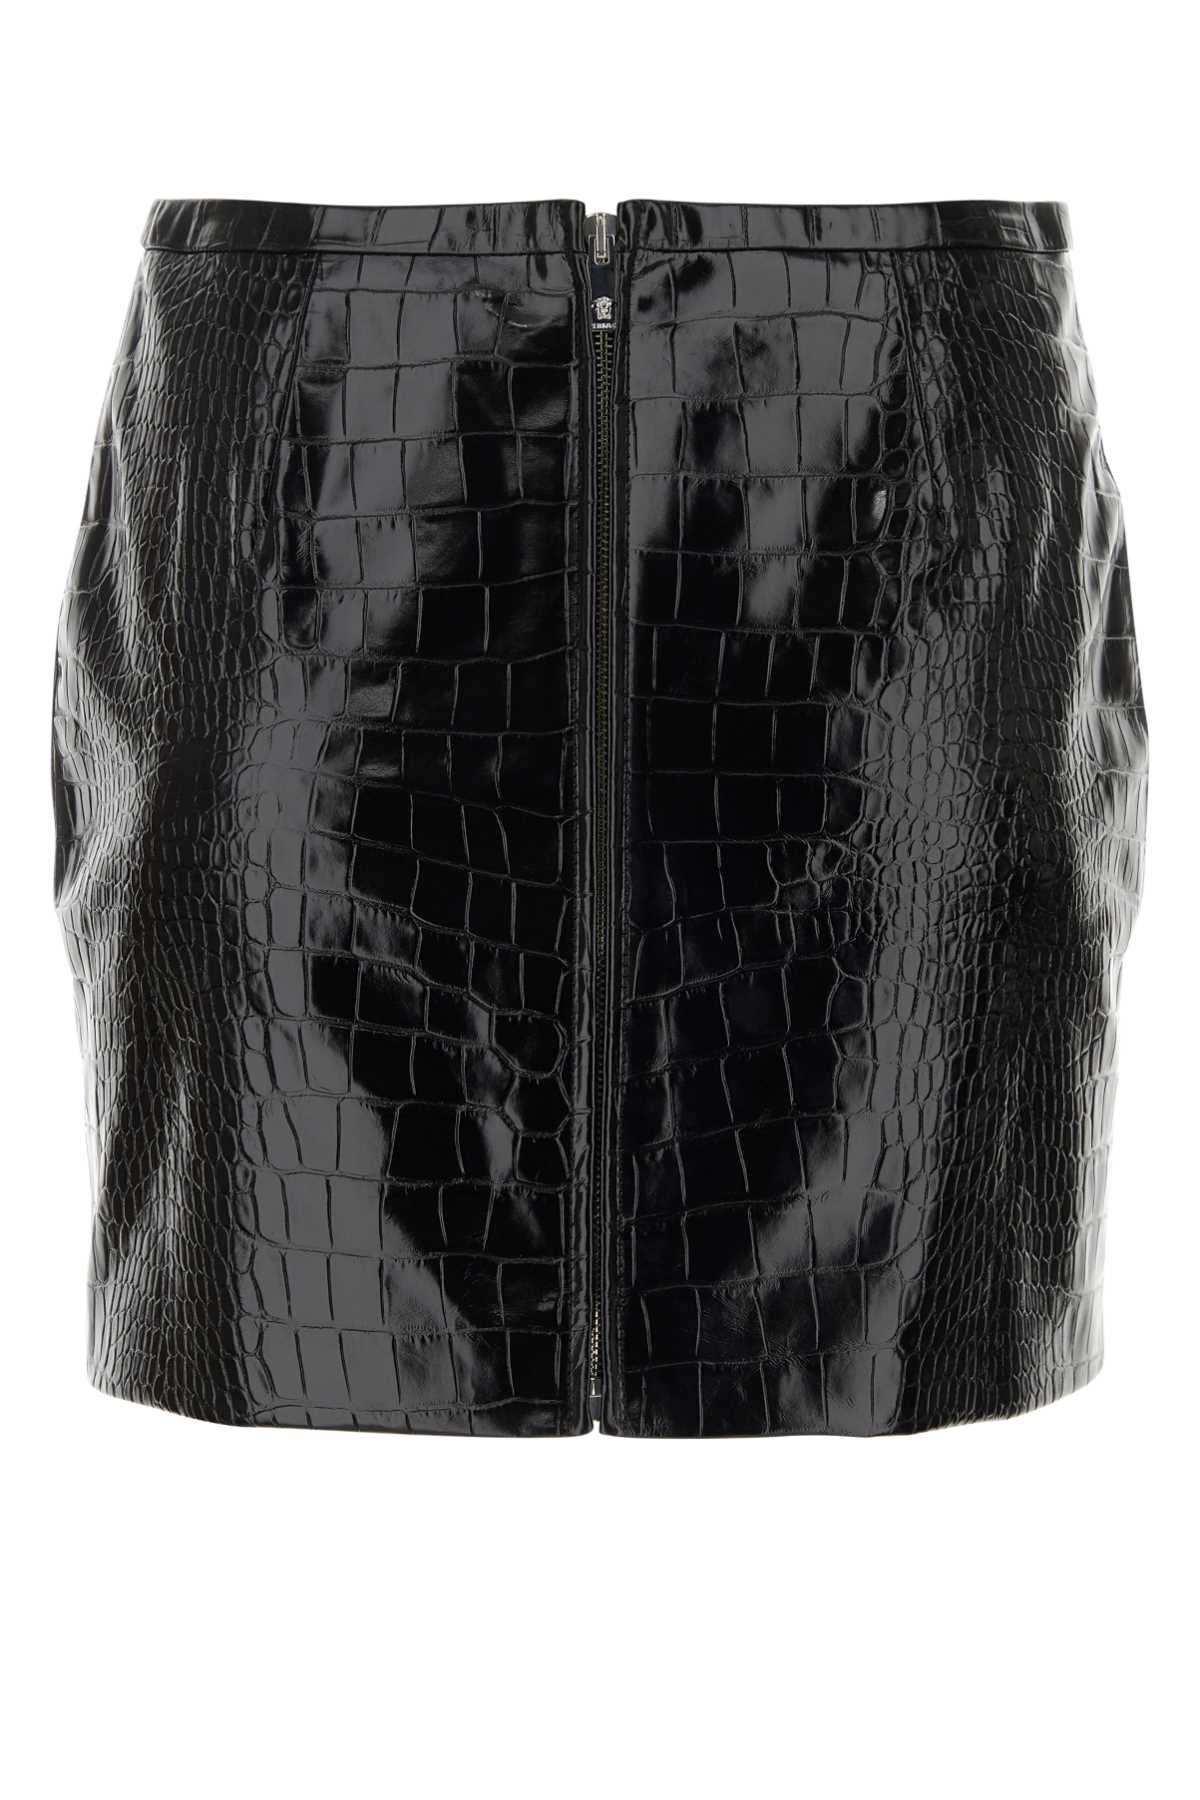 Versace Black Leather Mini Skirt In 1b000